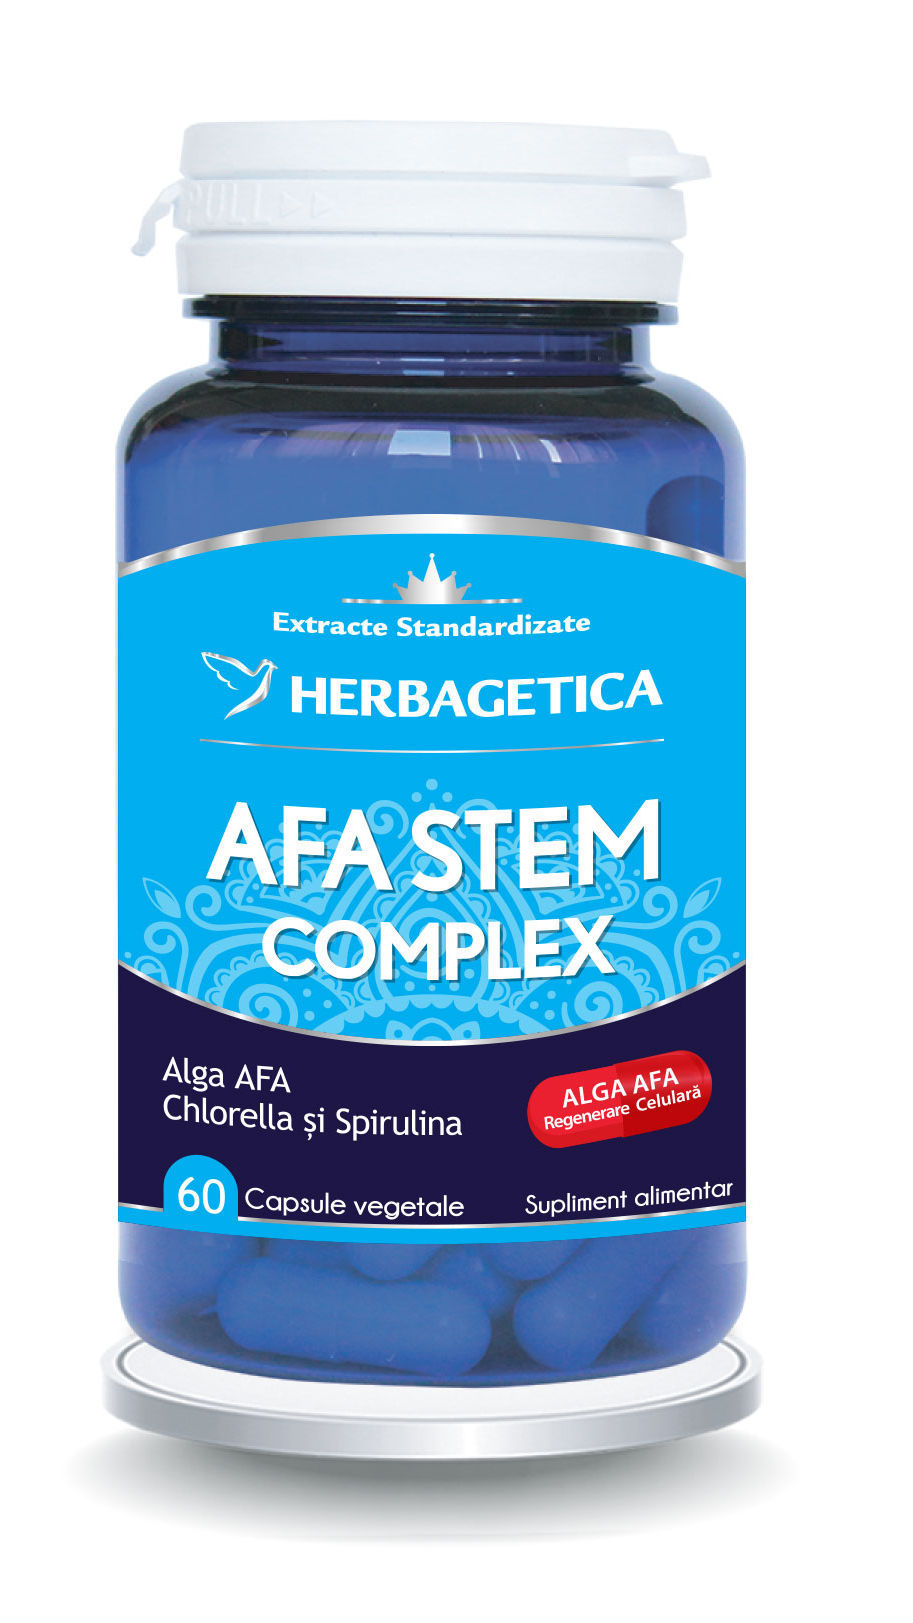 AFA STEM COMPLEX, Herbagetica